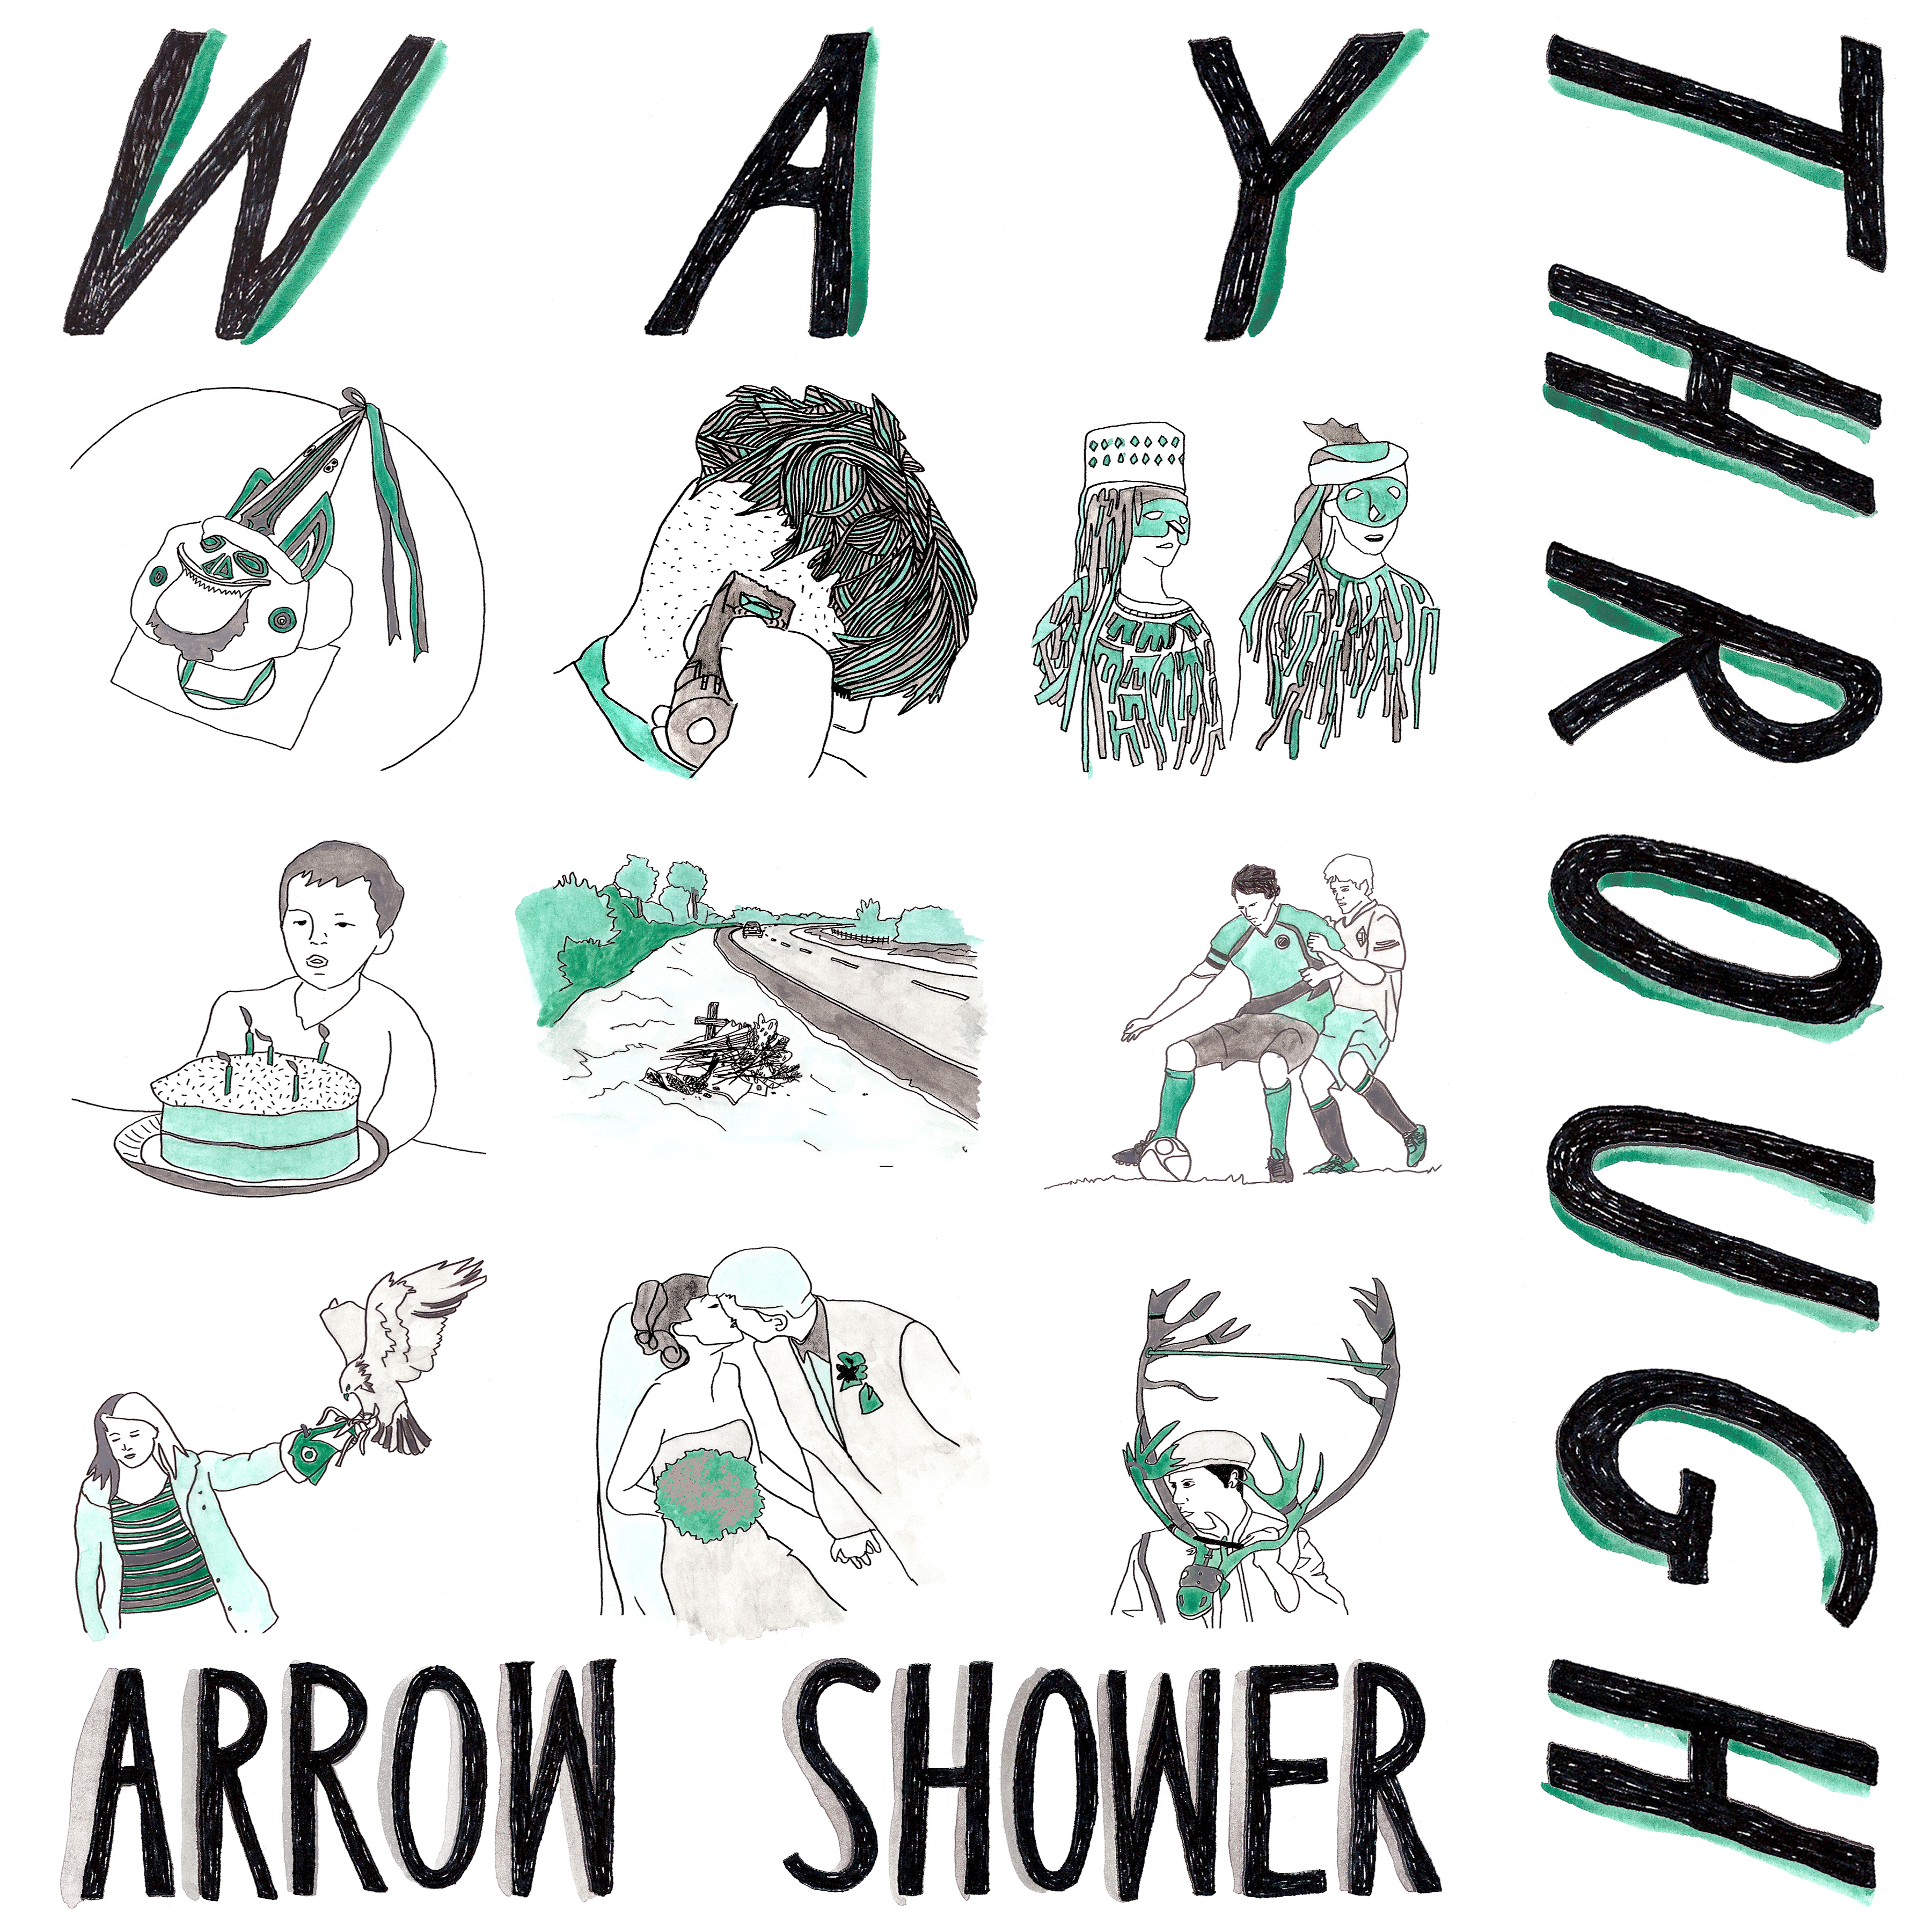 'Arrow Shower'